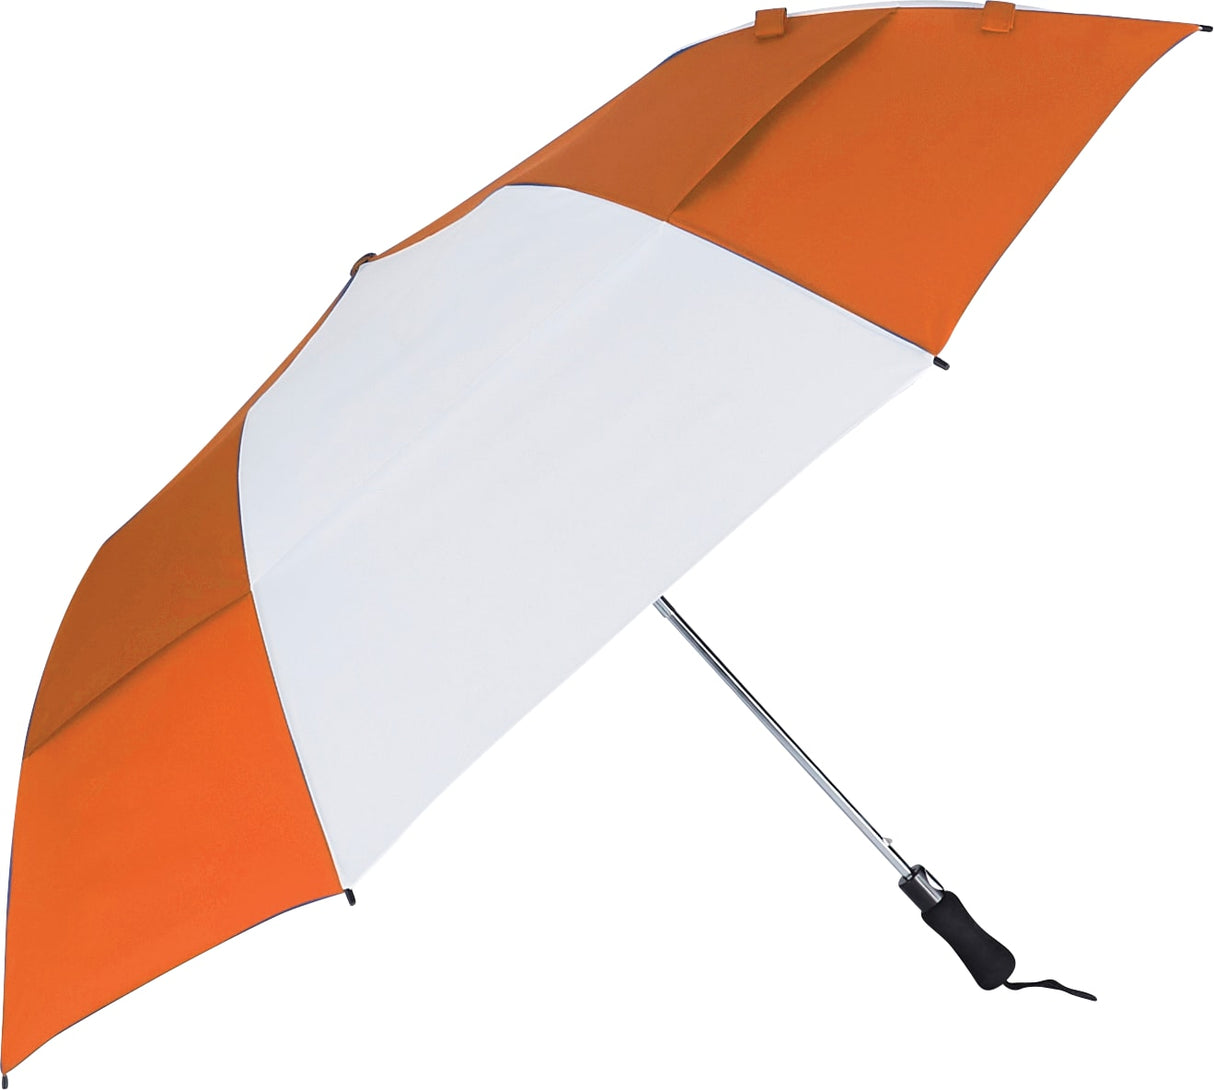 58" Vented Auto Open Folding Golf Umbrella